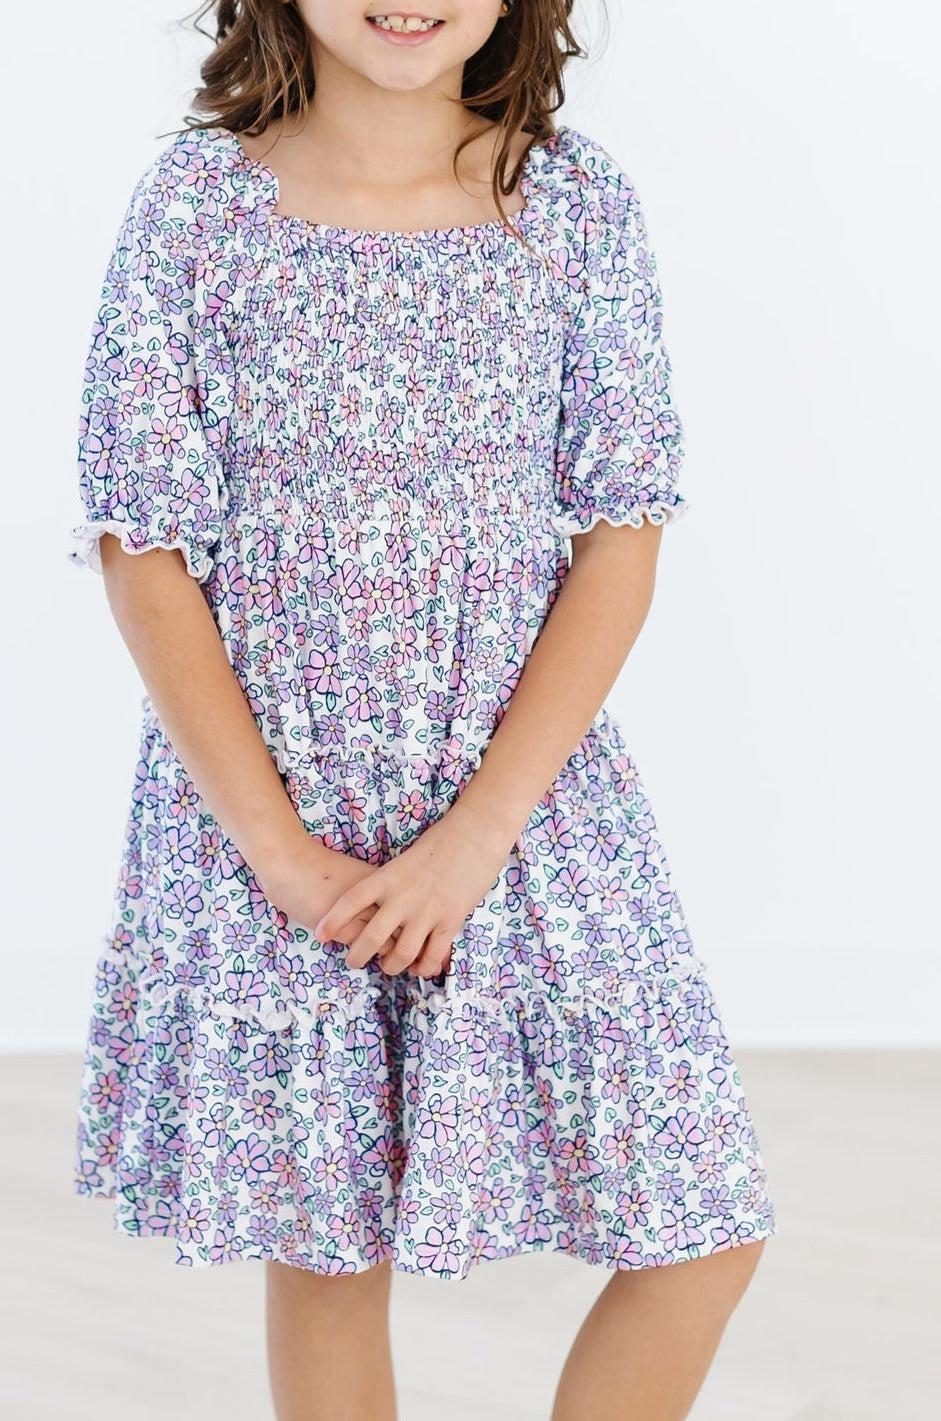 Lovely Lavender Smocked Ruffle Dress  - Doodlebug's Children's Boutique